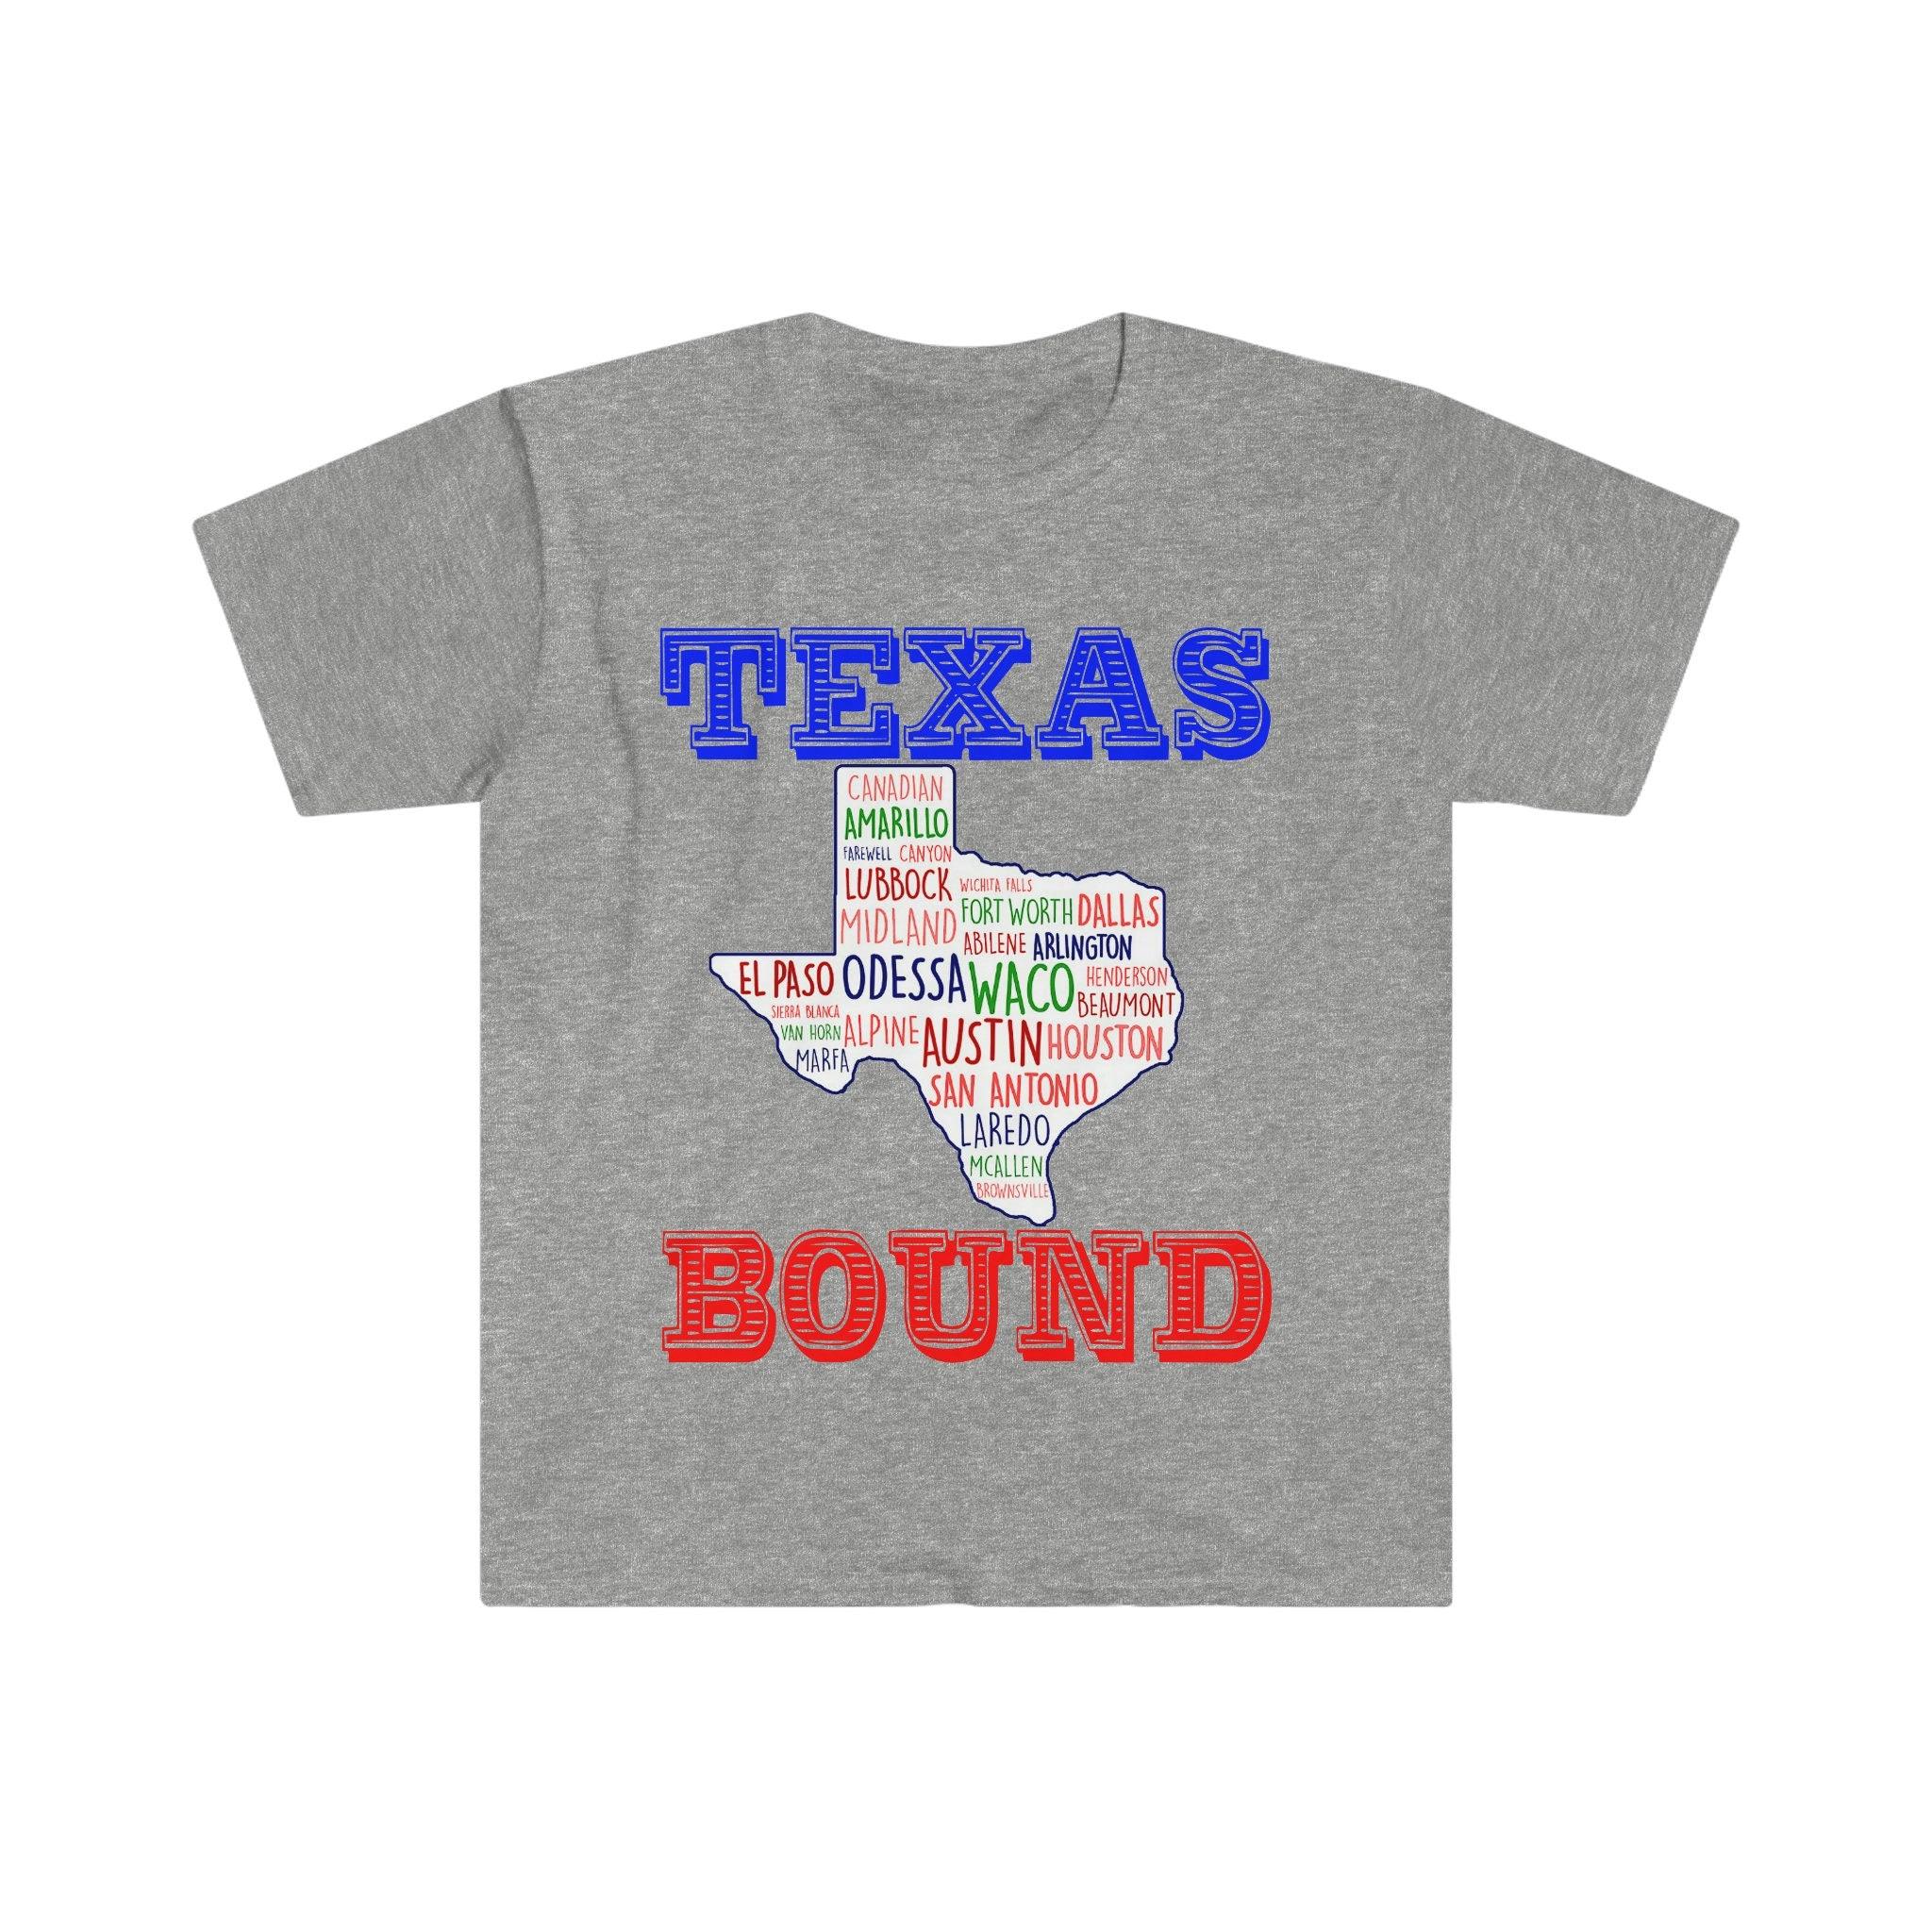 Texas bundet | Texas Places T-shirts |Texas Map T-shirts, Flytning til Austin, Velkommen til Texas Gift, Texas Bound, Ny i Texas, Flytning til DFW Beat biden skattestigning, Biden skatteplan, kystliberal, Houston, flytter til austin, Flytning til DFW, Flytter til Texas, Flytter til Texas-krus, Ny i Texas, Republikaner, Tee, T-shirts, bundet til Texas, texas pige, texas republikansk i - plusminusco.com